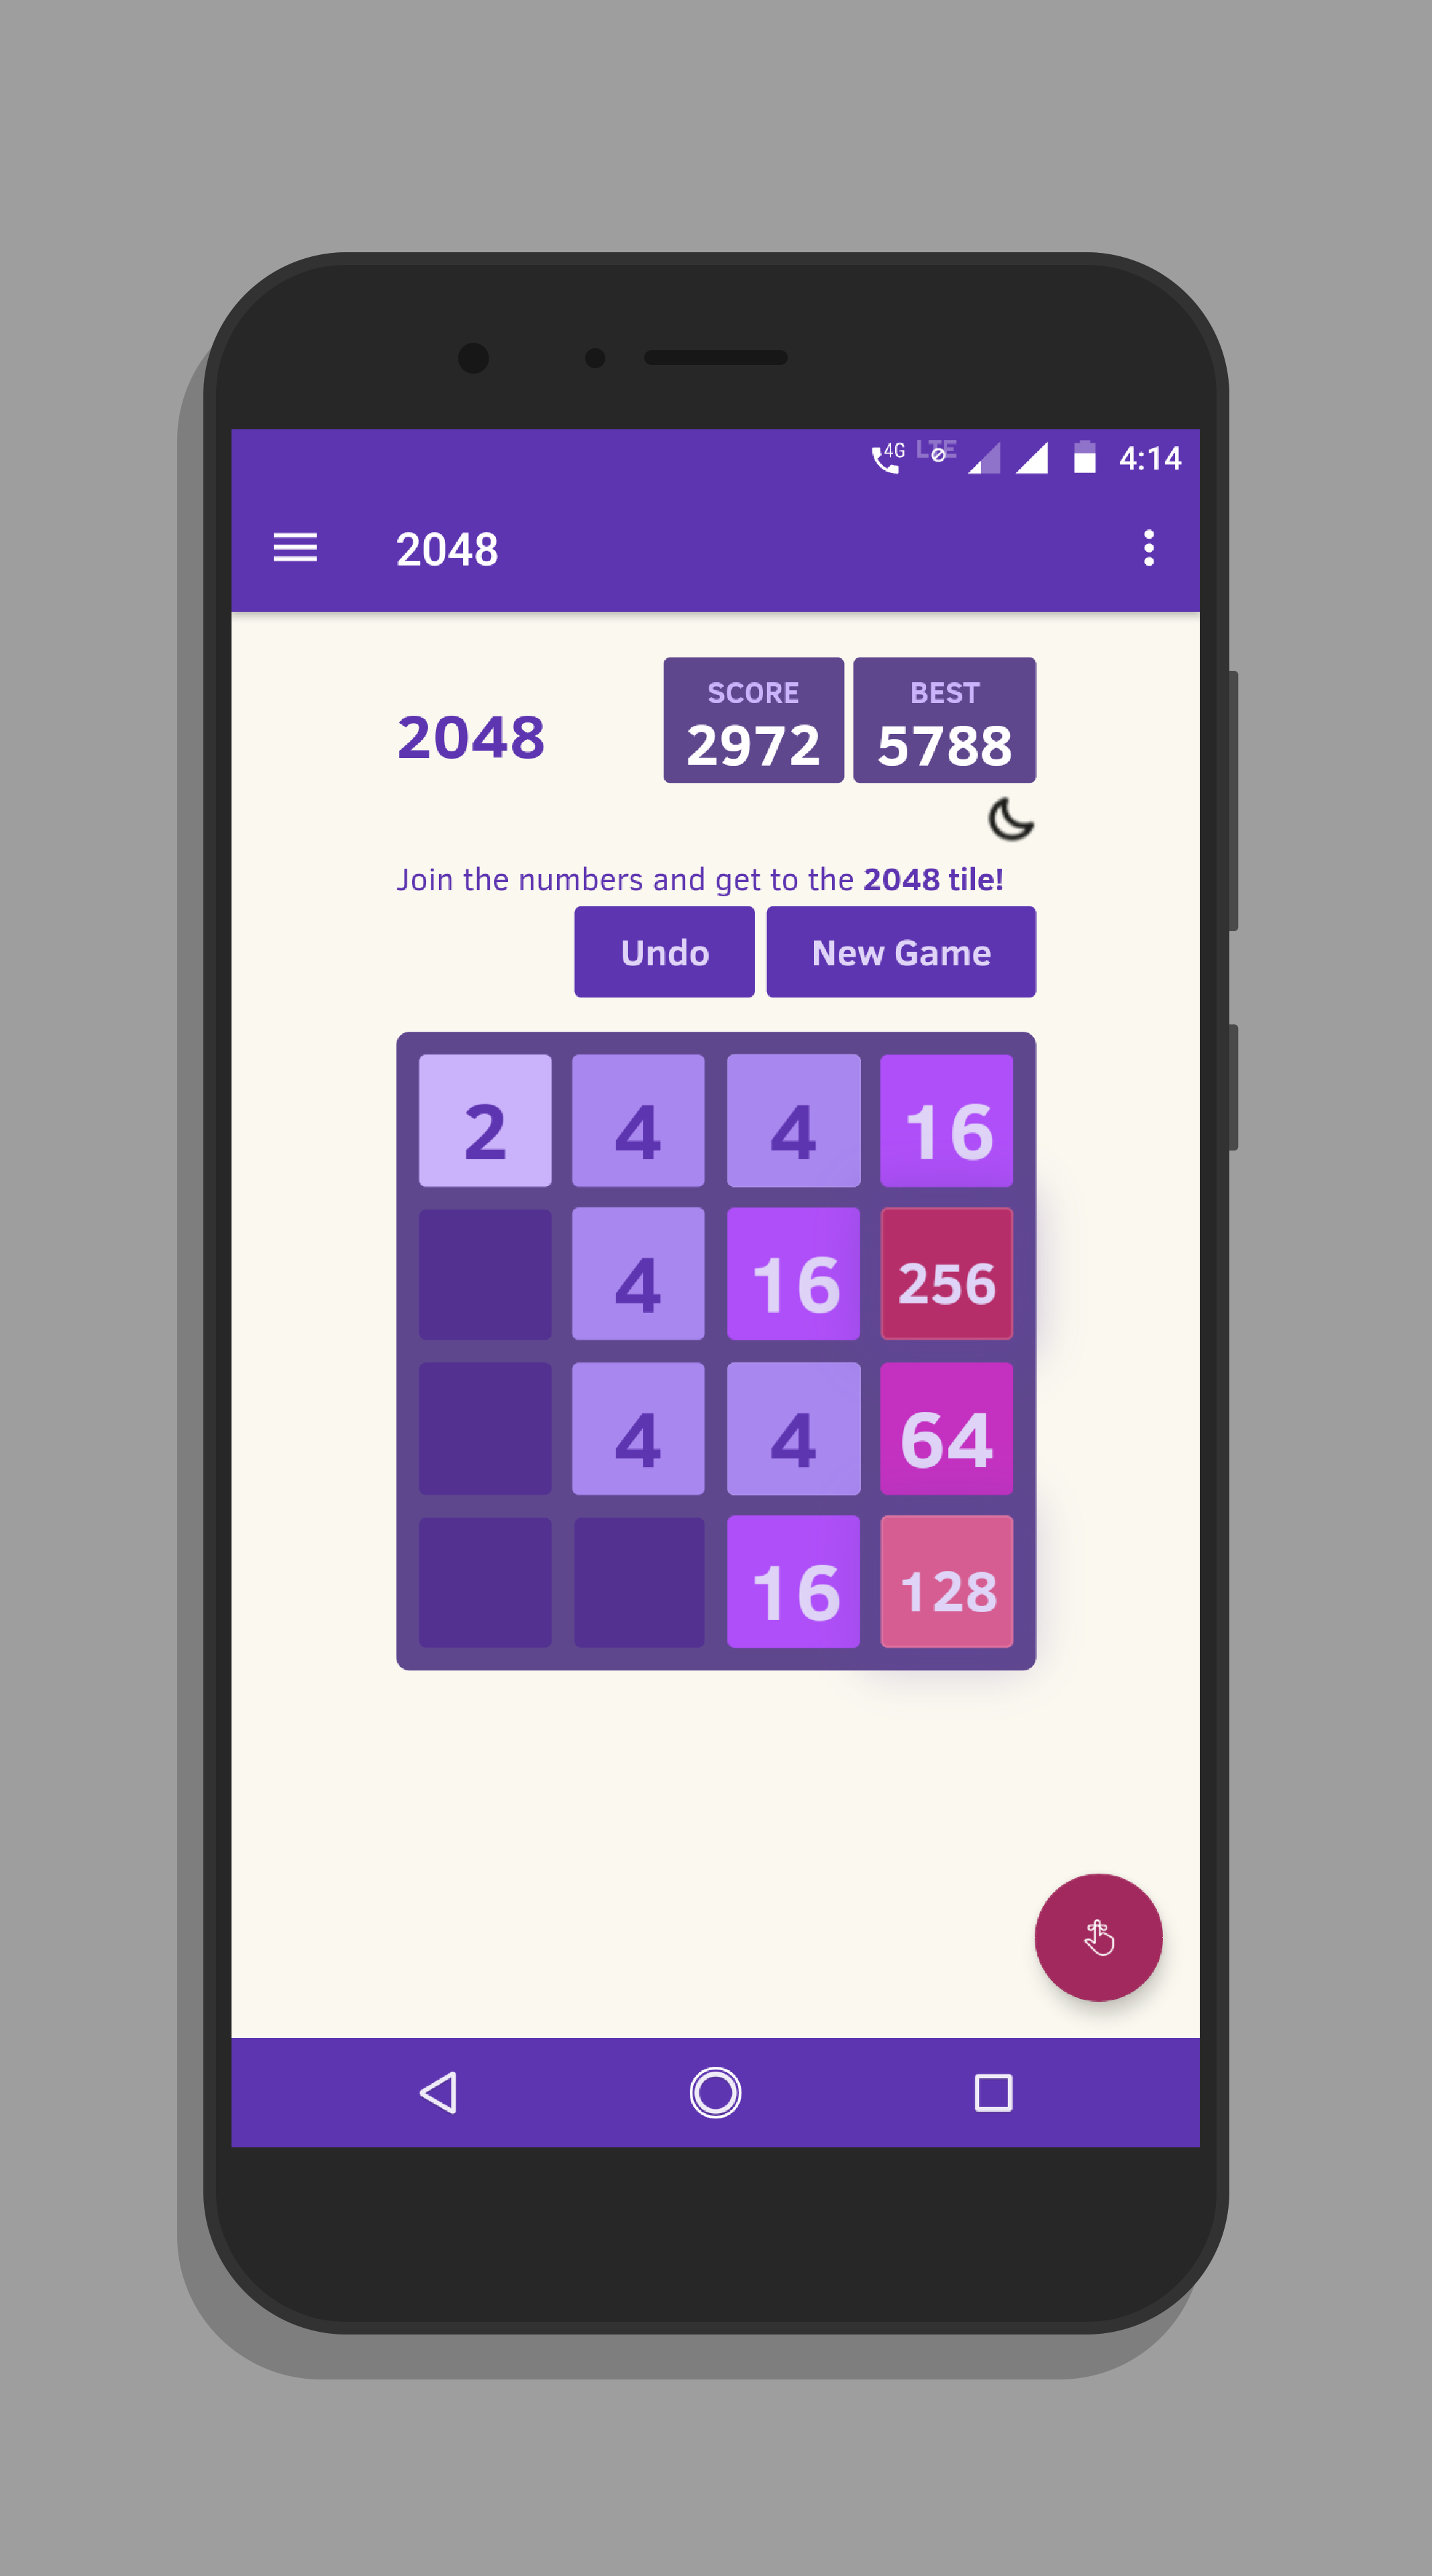 2048 puzzle game - dare to win 2048 game